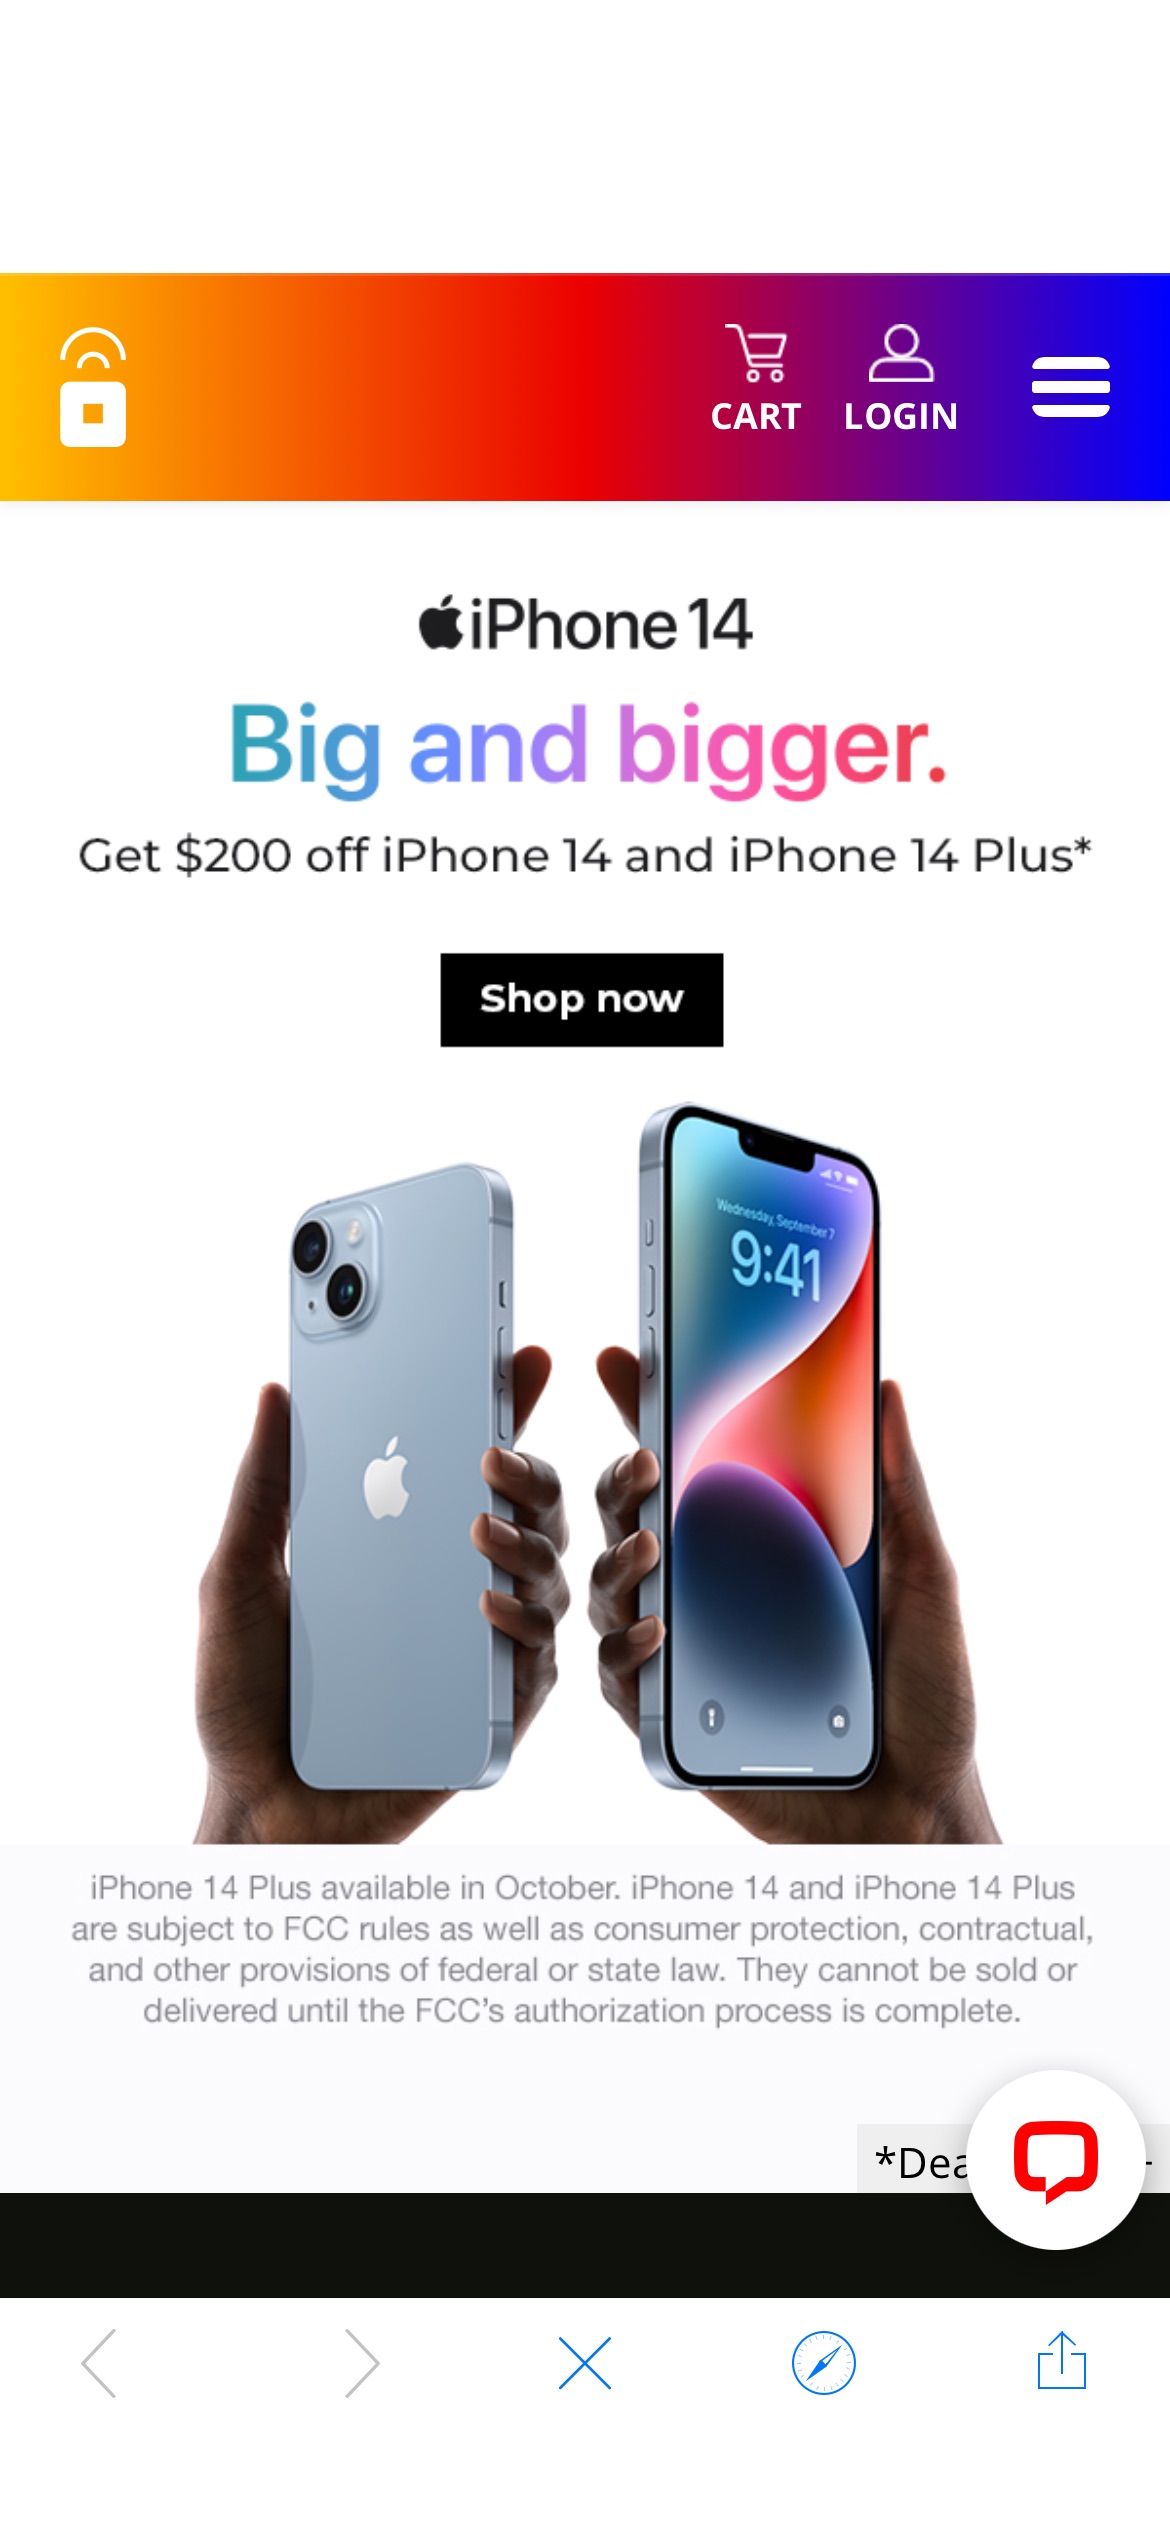 Repocket

Get $200 off iPhone 14 and iPhone 14 Plus*

三家电话网络供你选择